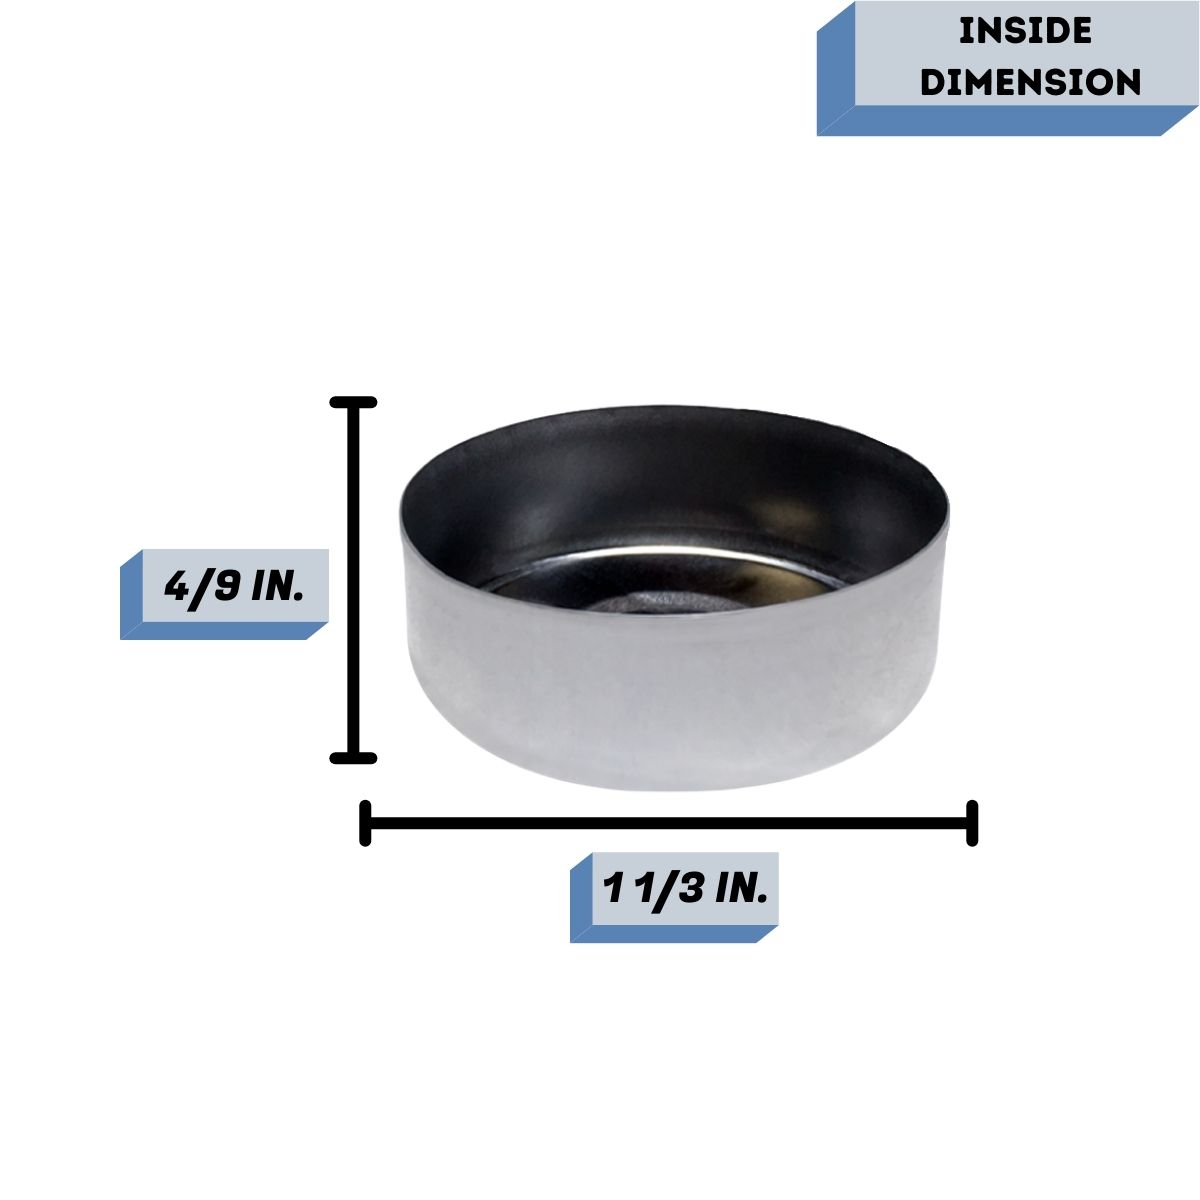 Aluminum tealight cups Measurement (2)